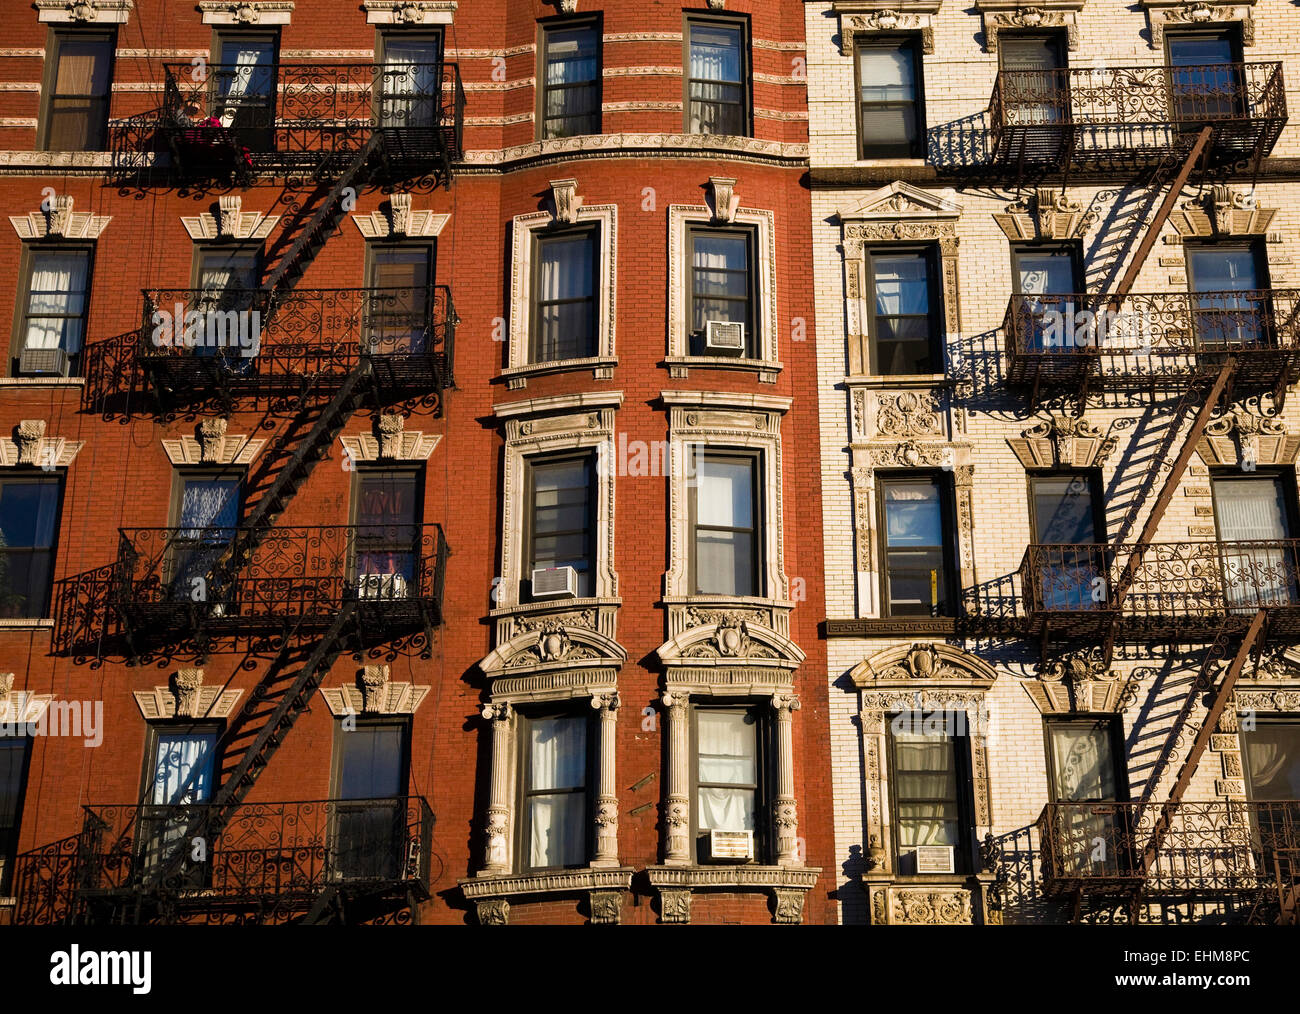 New York City Brownstone Tenement Buildings, New York, United States of America Stock Photo